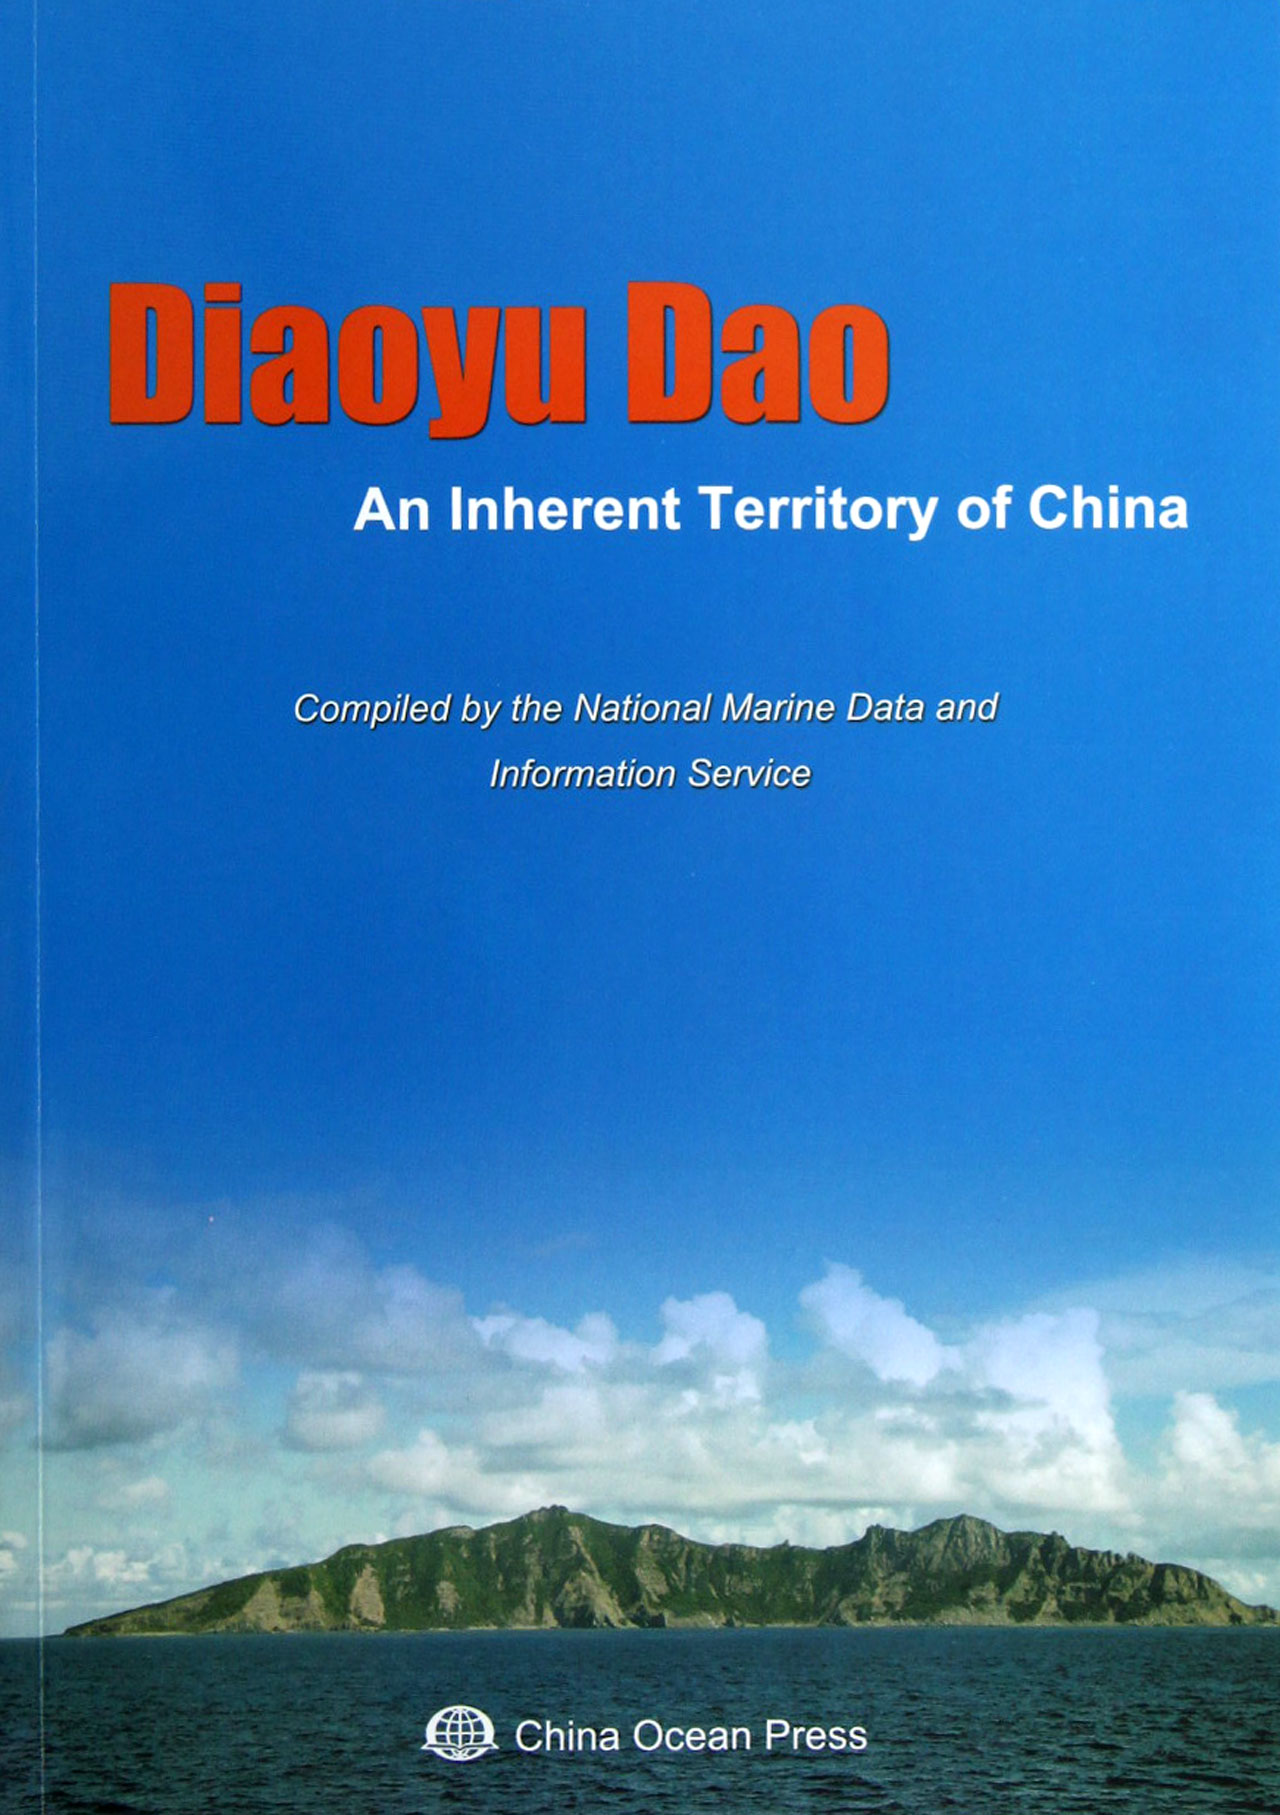 diaoyu dao(an inherent territory of china)